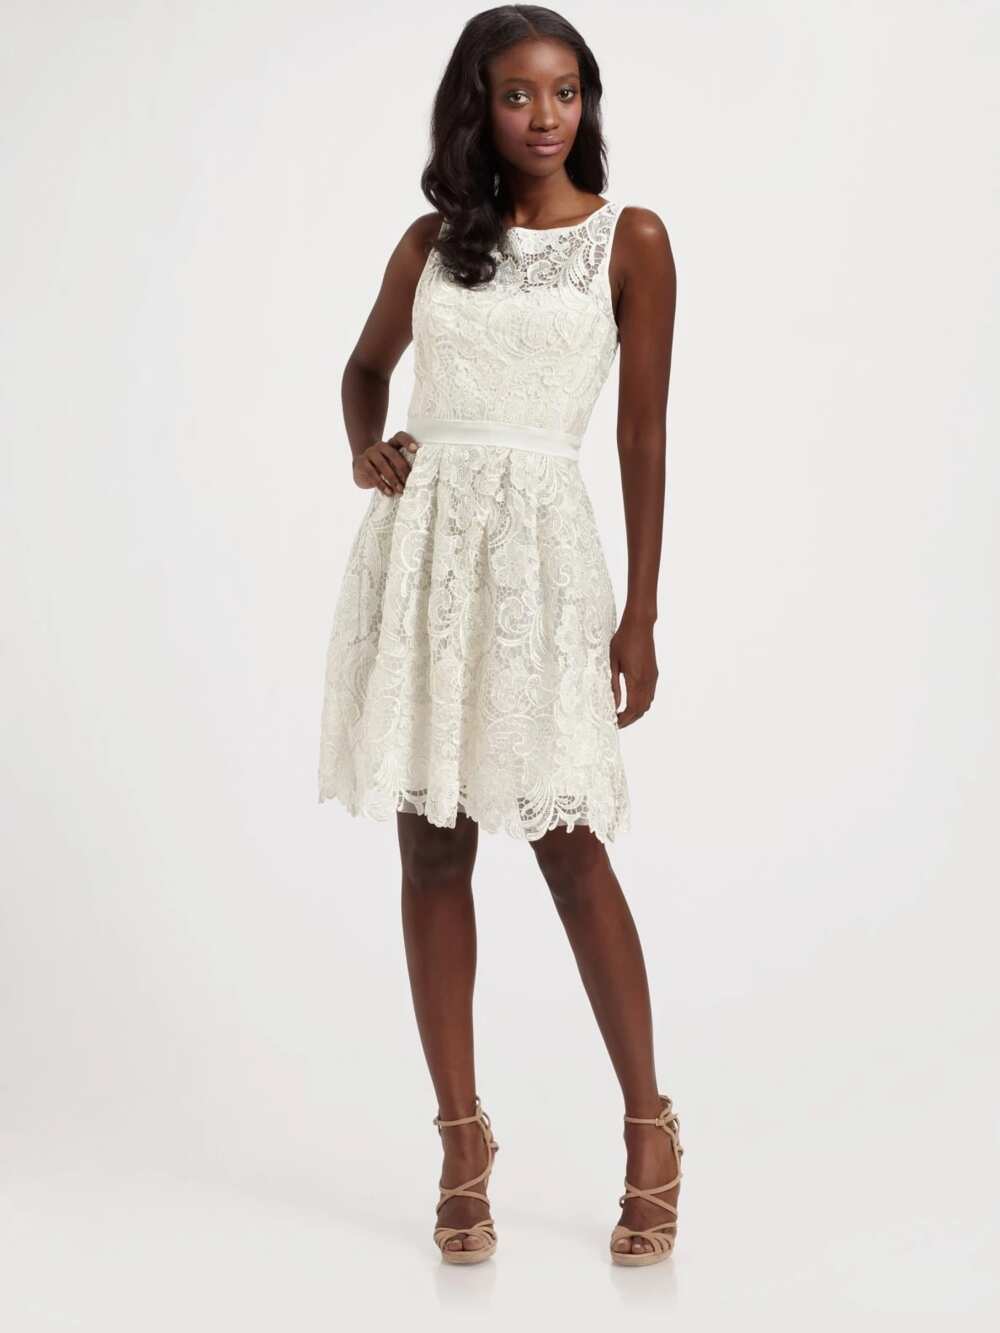 Short white lace dress